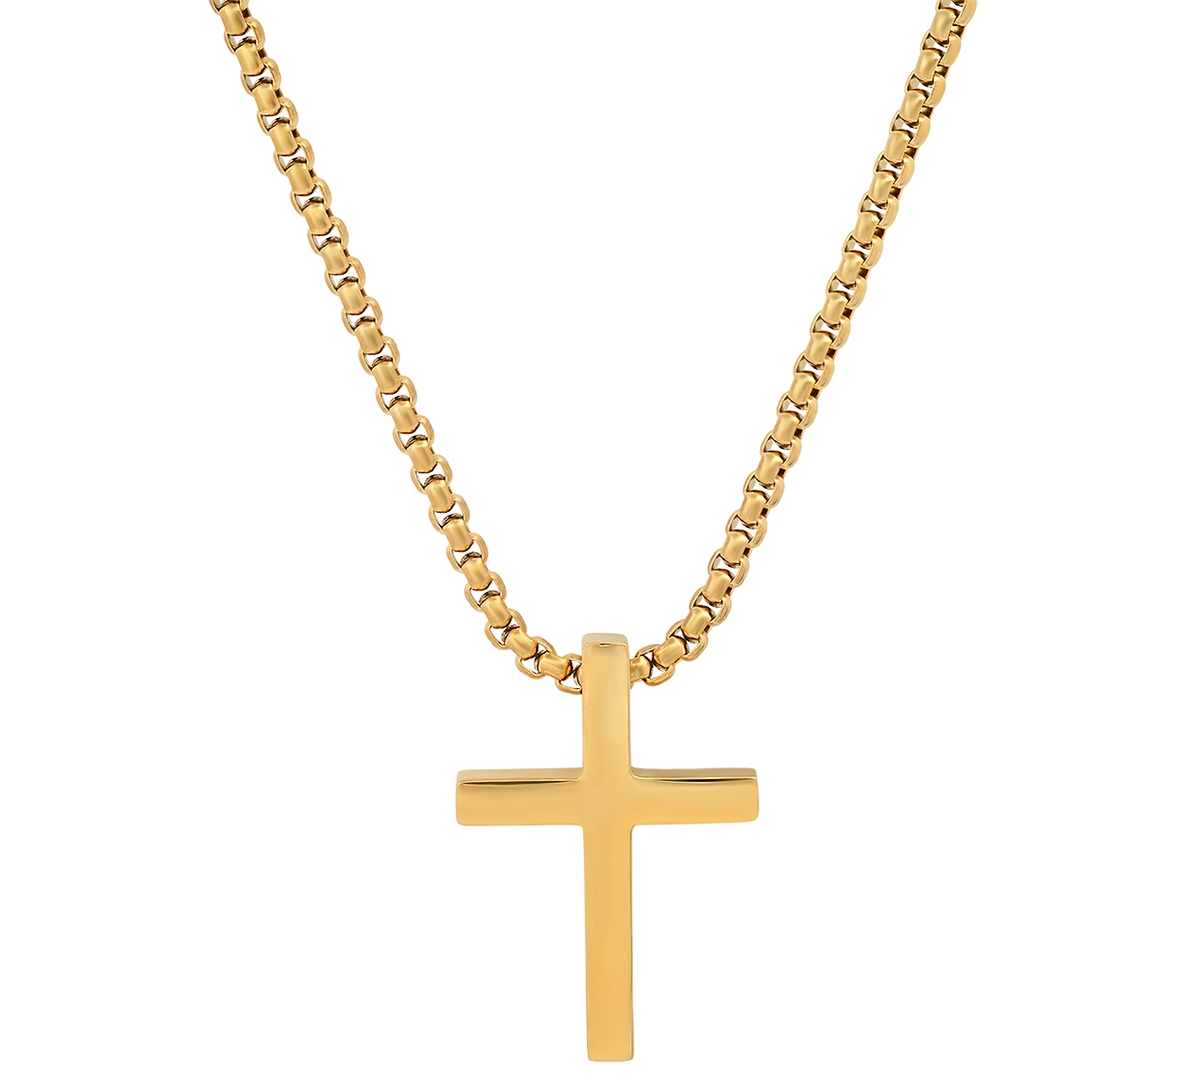 Shop Steeltime Men's Polished Cross Pendant Necklace, 24" In Gold